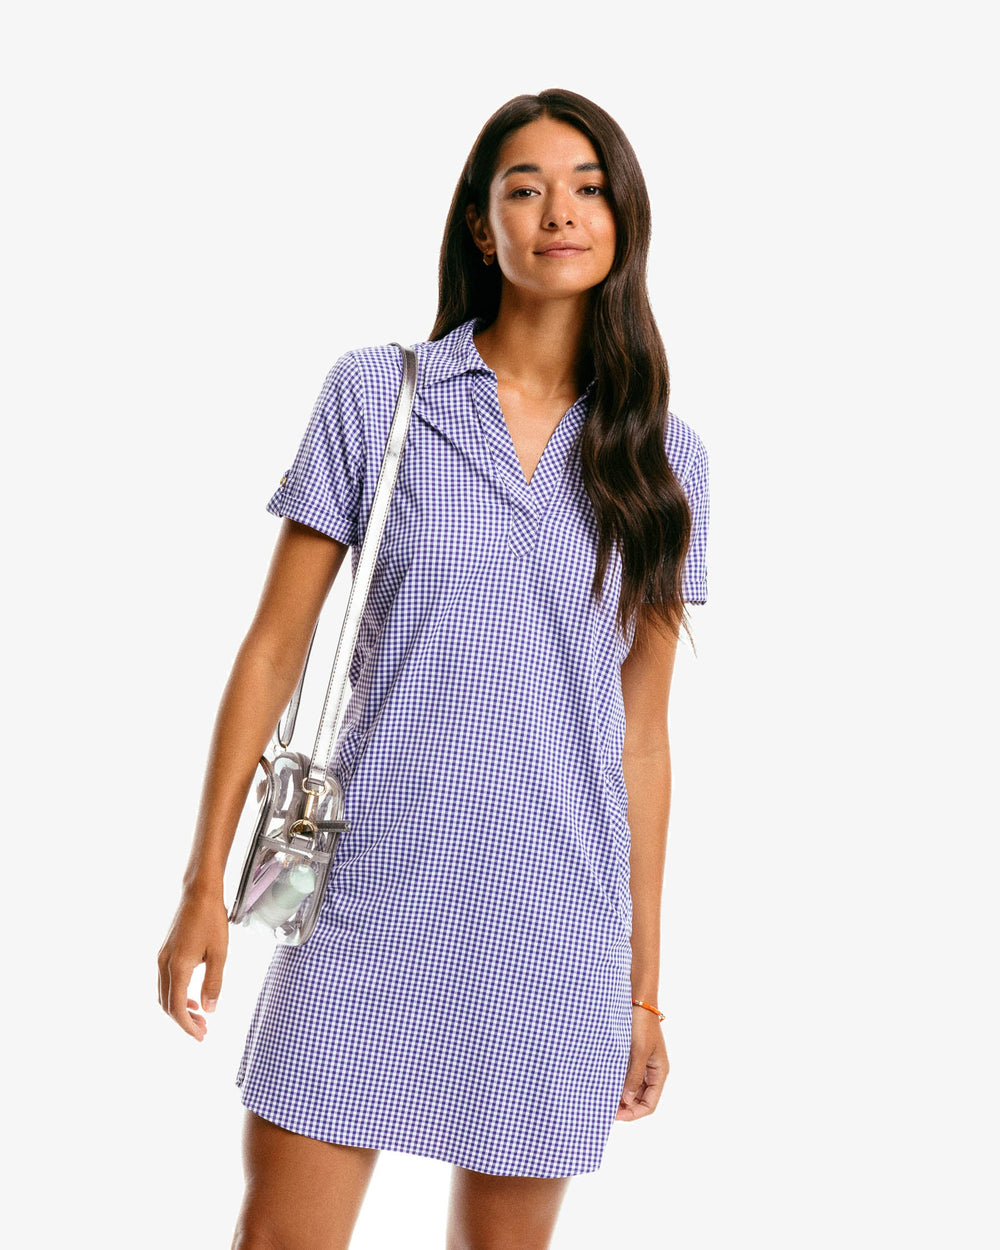 The model front of the Women's Gameday Kamryn Intercoastal Shirt Dress by Southern Tide - Regal Purple